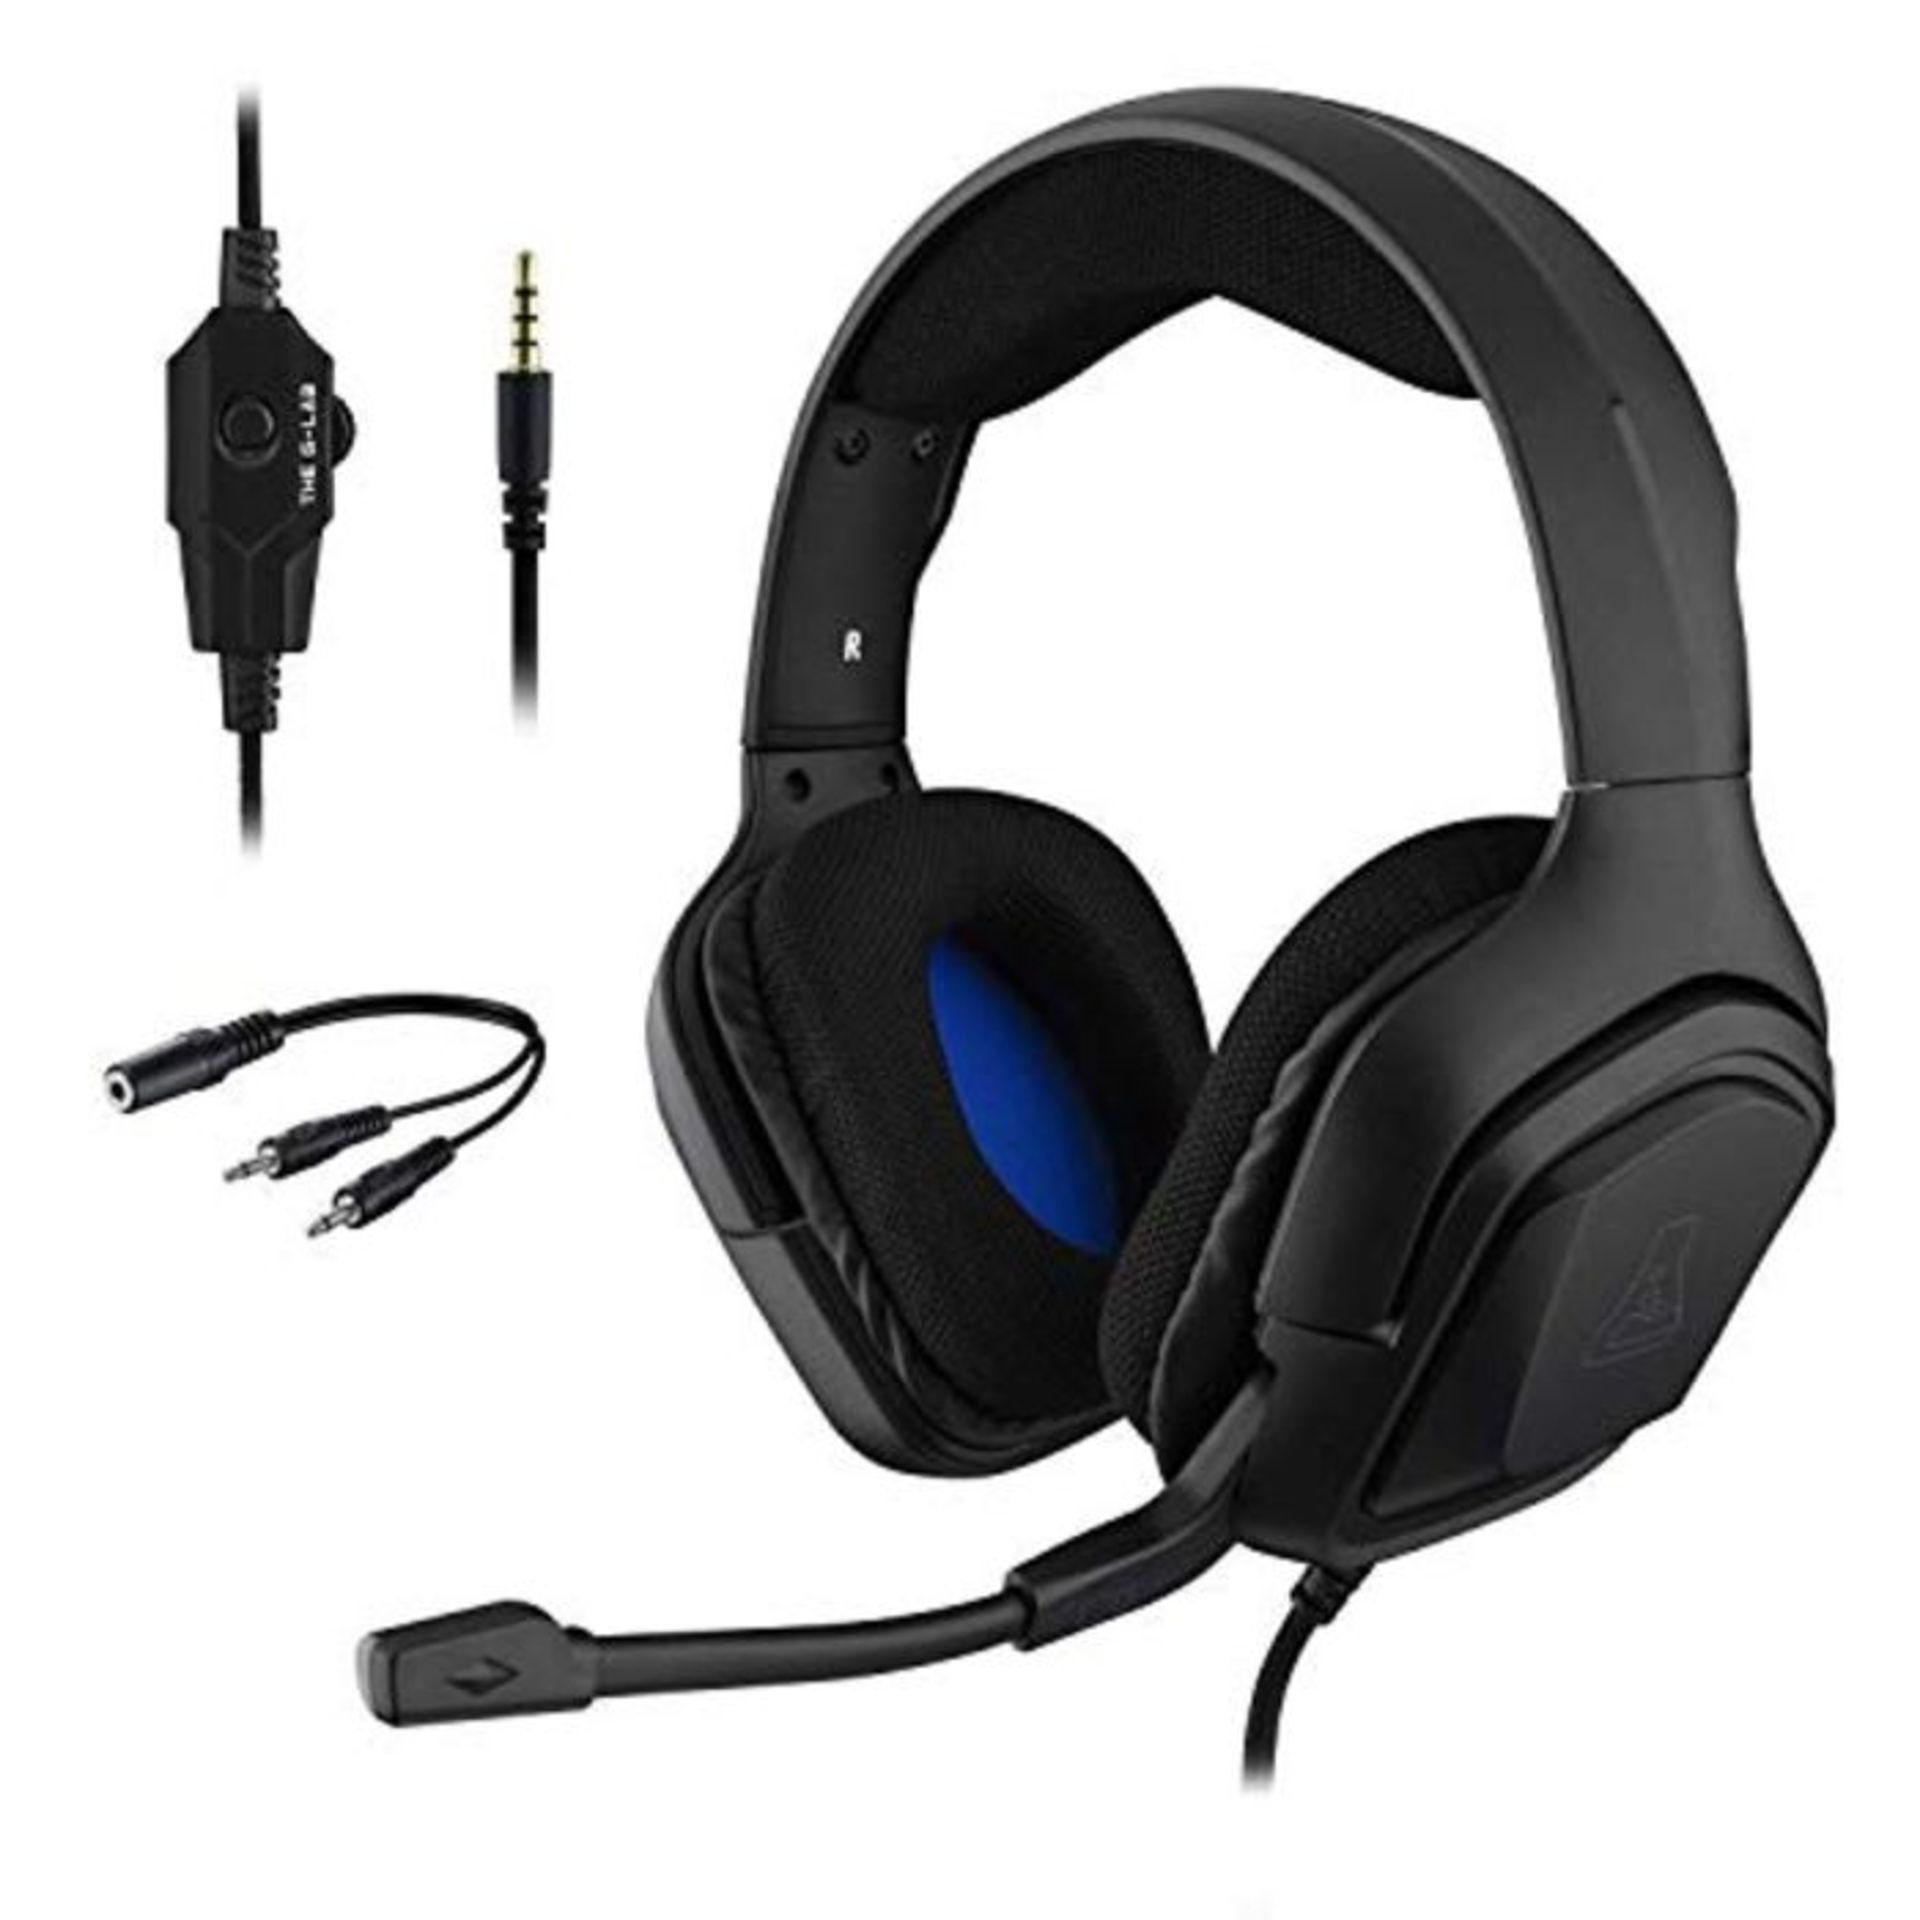 G-LAB KORP Cobalt PS4 Gaming Headset - Stereo Audio Gaming Headset, Ultra Light, High